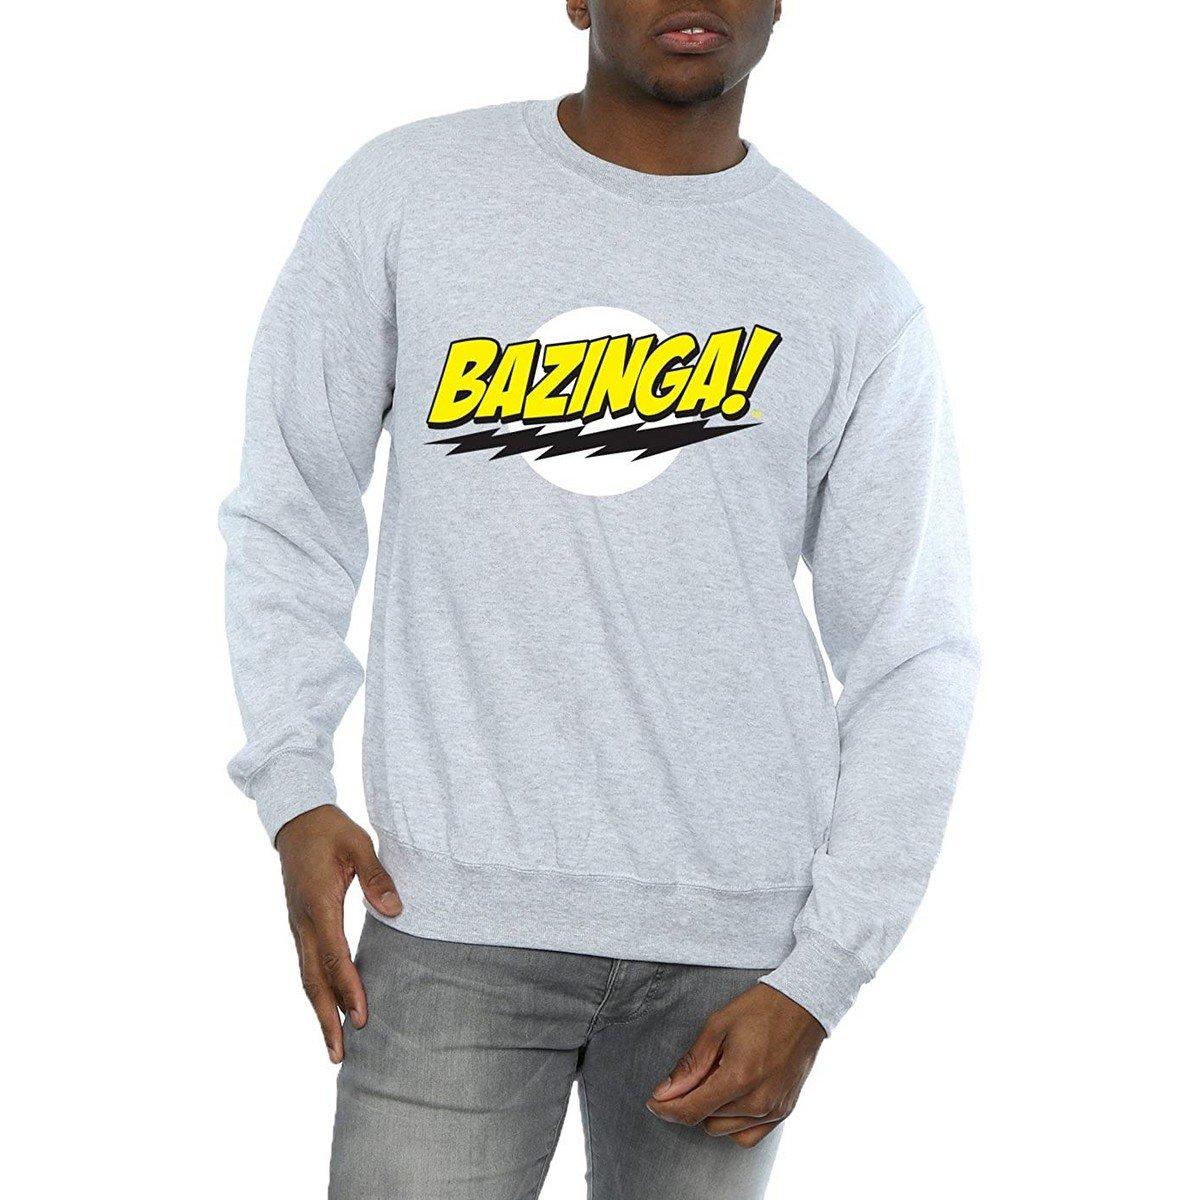 Bazinga Sweatshirt Herren Grau XL von The Big Bang Theory